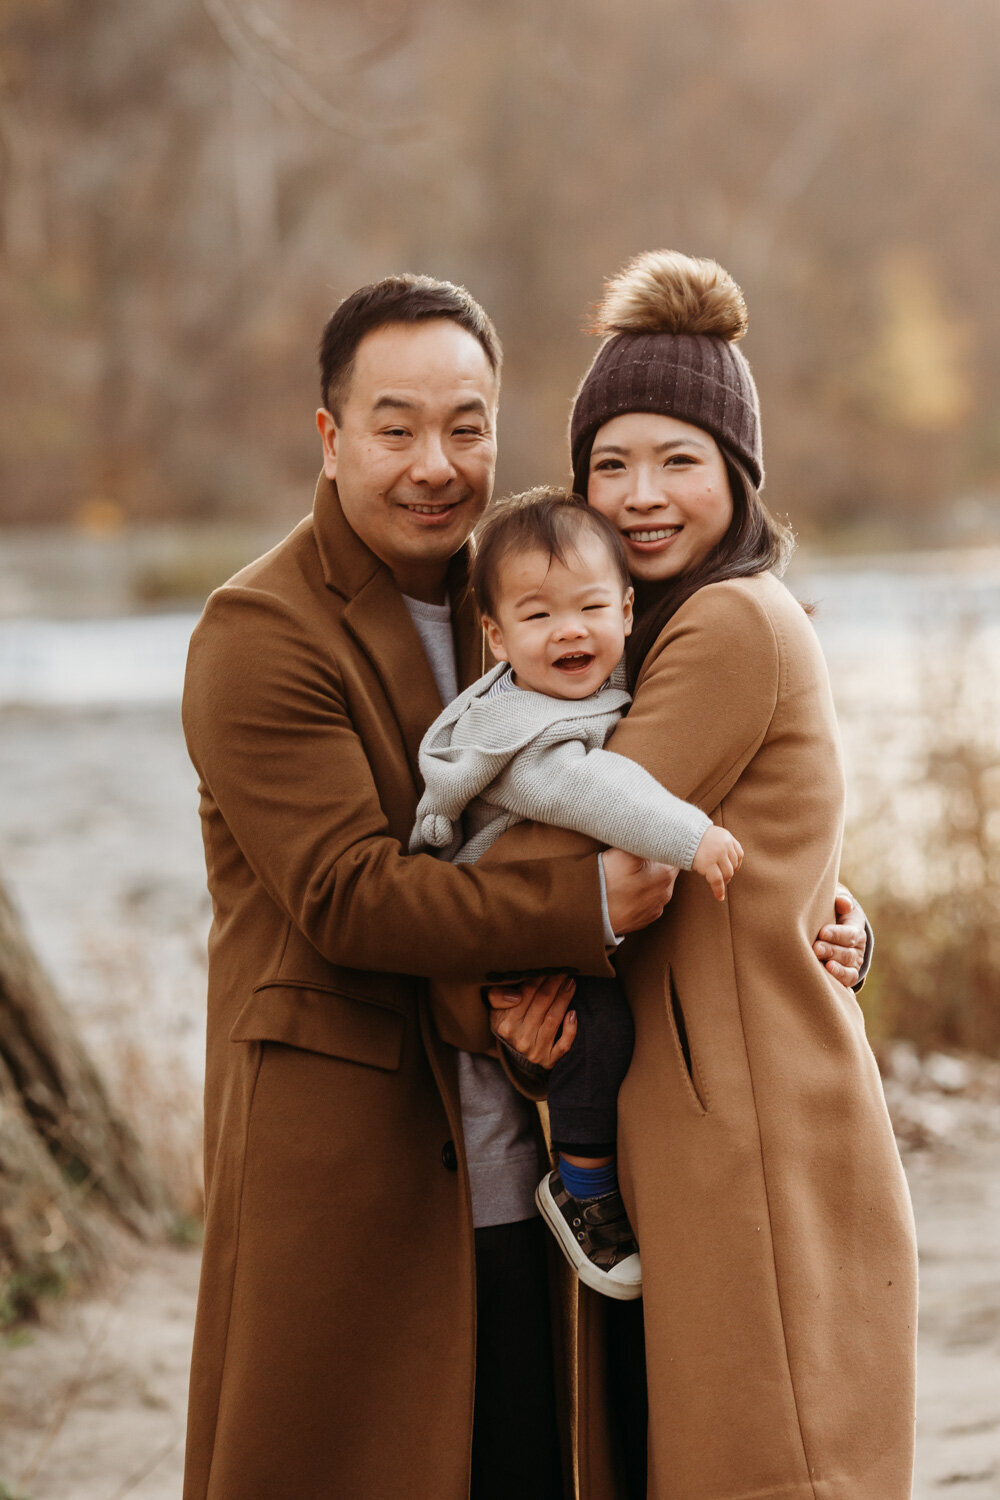 Family portrait in front of humber river in November